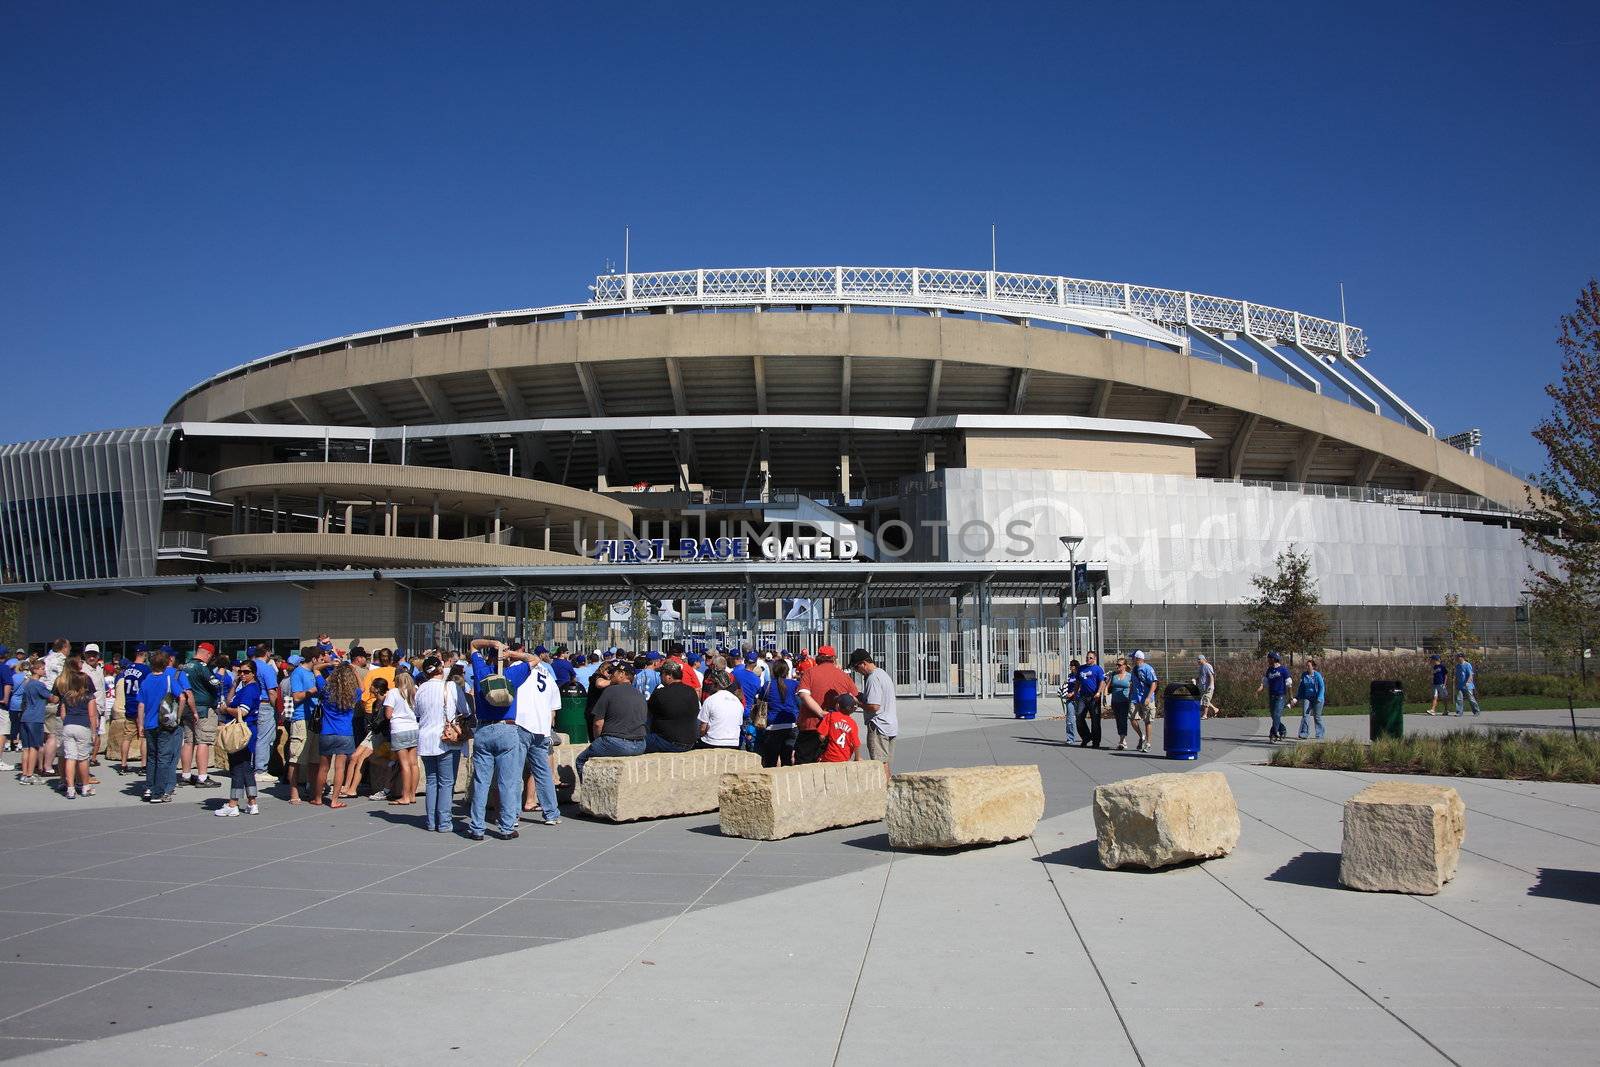 Kauffman Stadium - Kansas City Royals by Ffooter